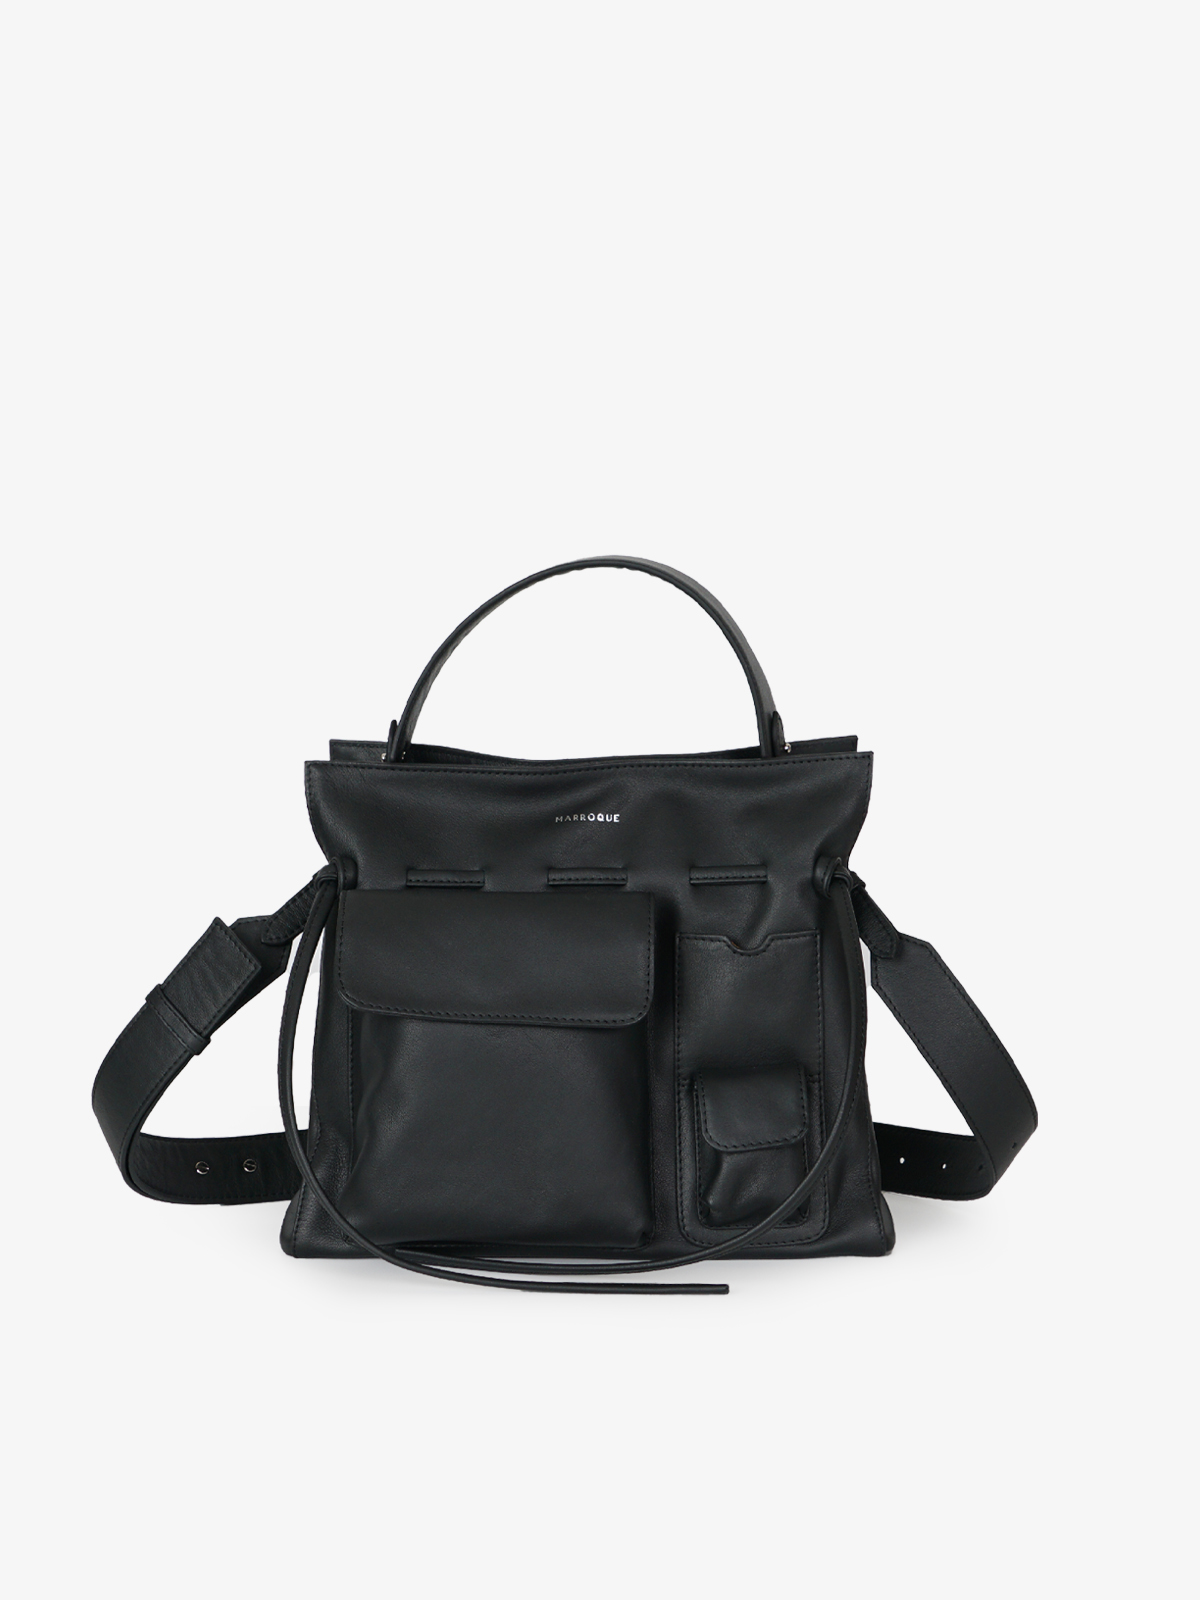 Marroque-Wendy28-leather-bag-carbon